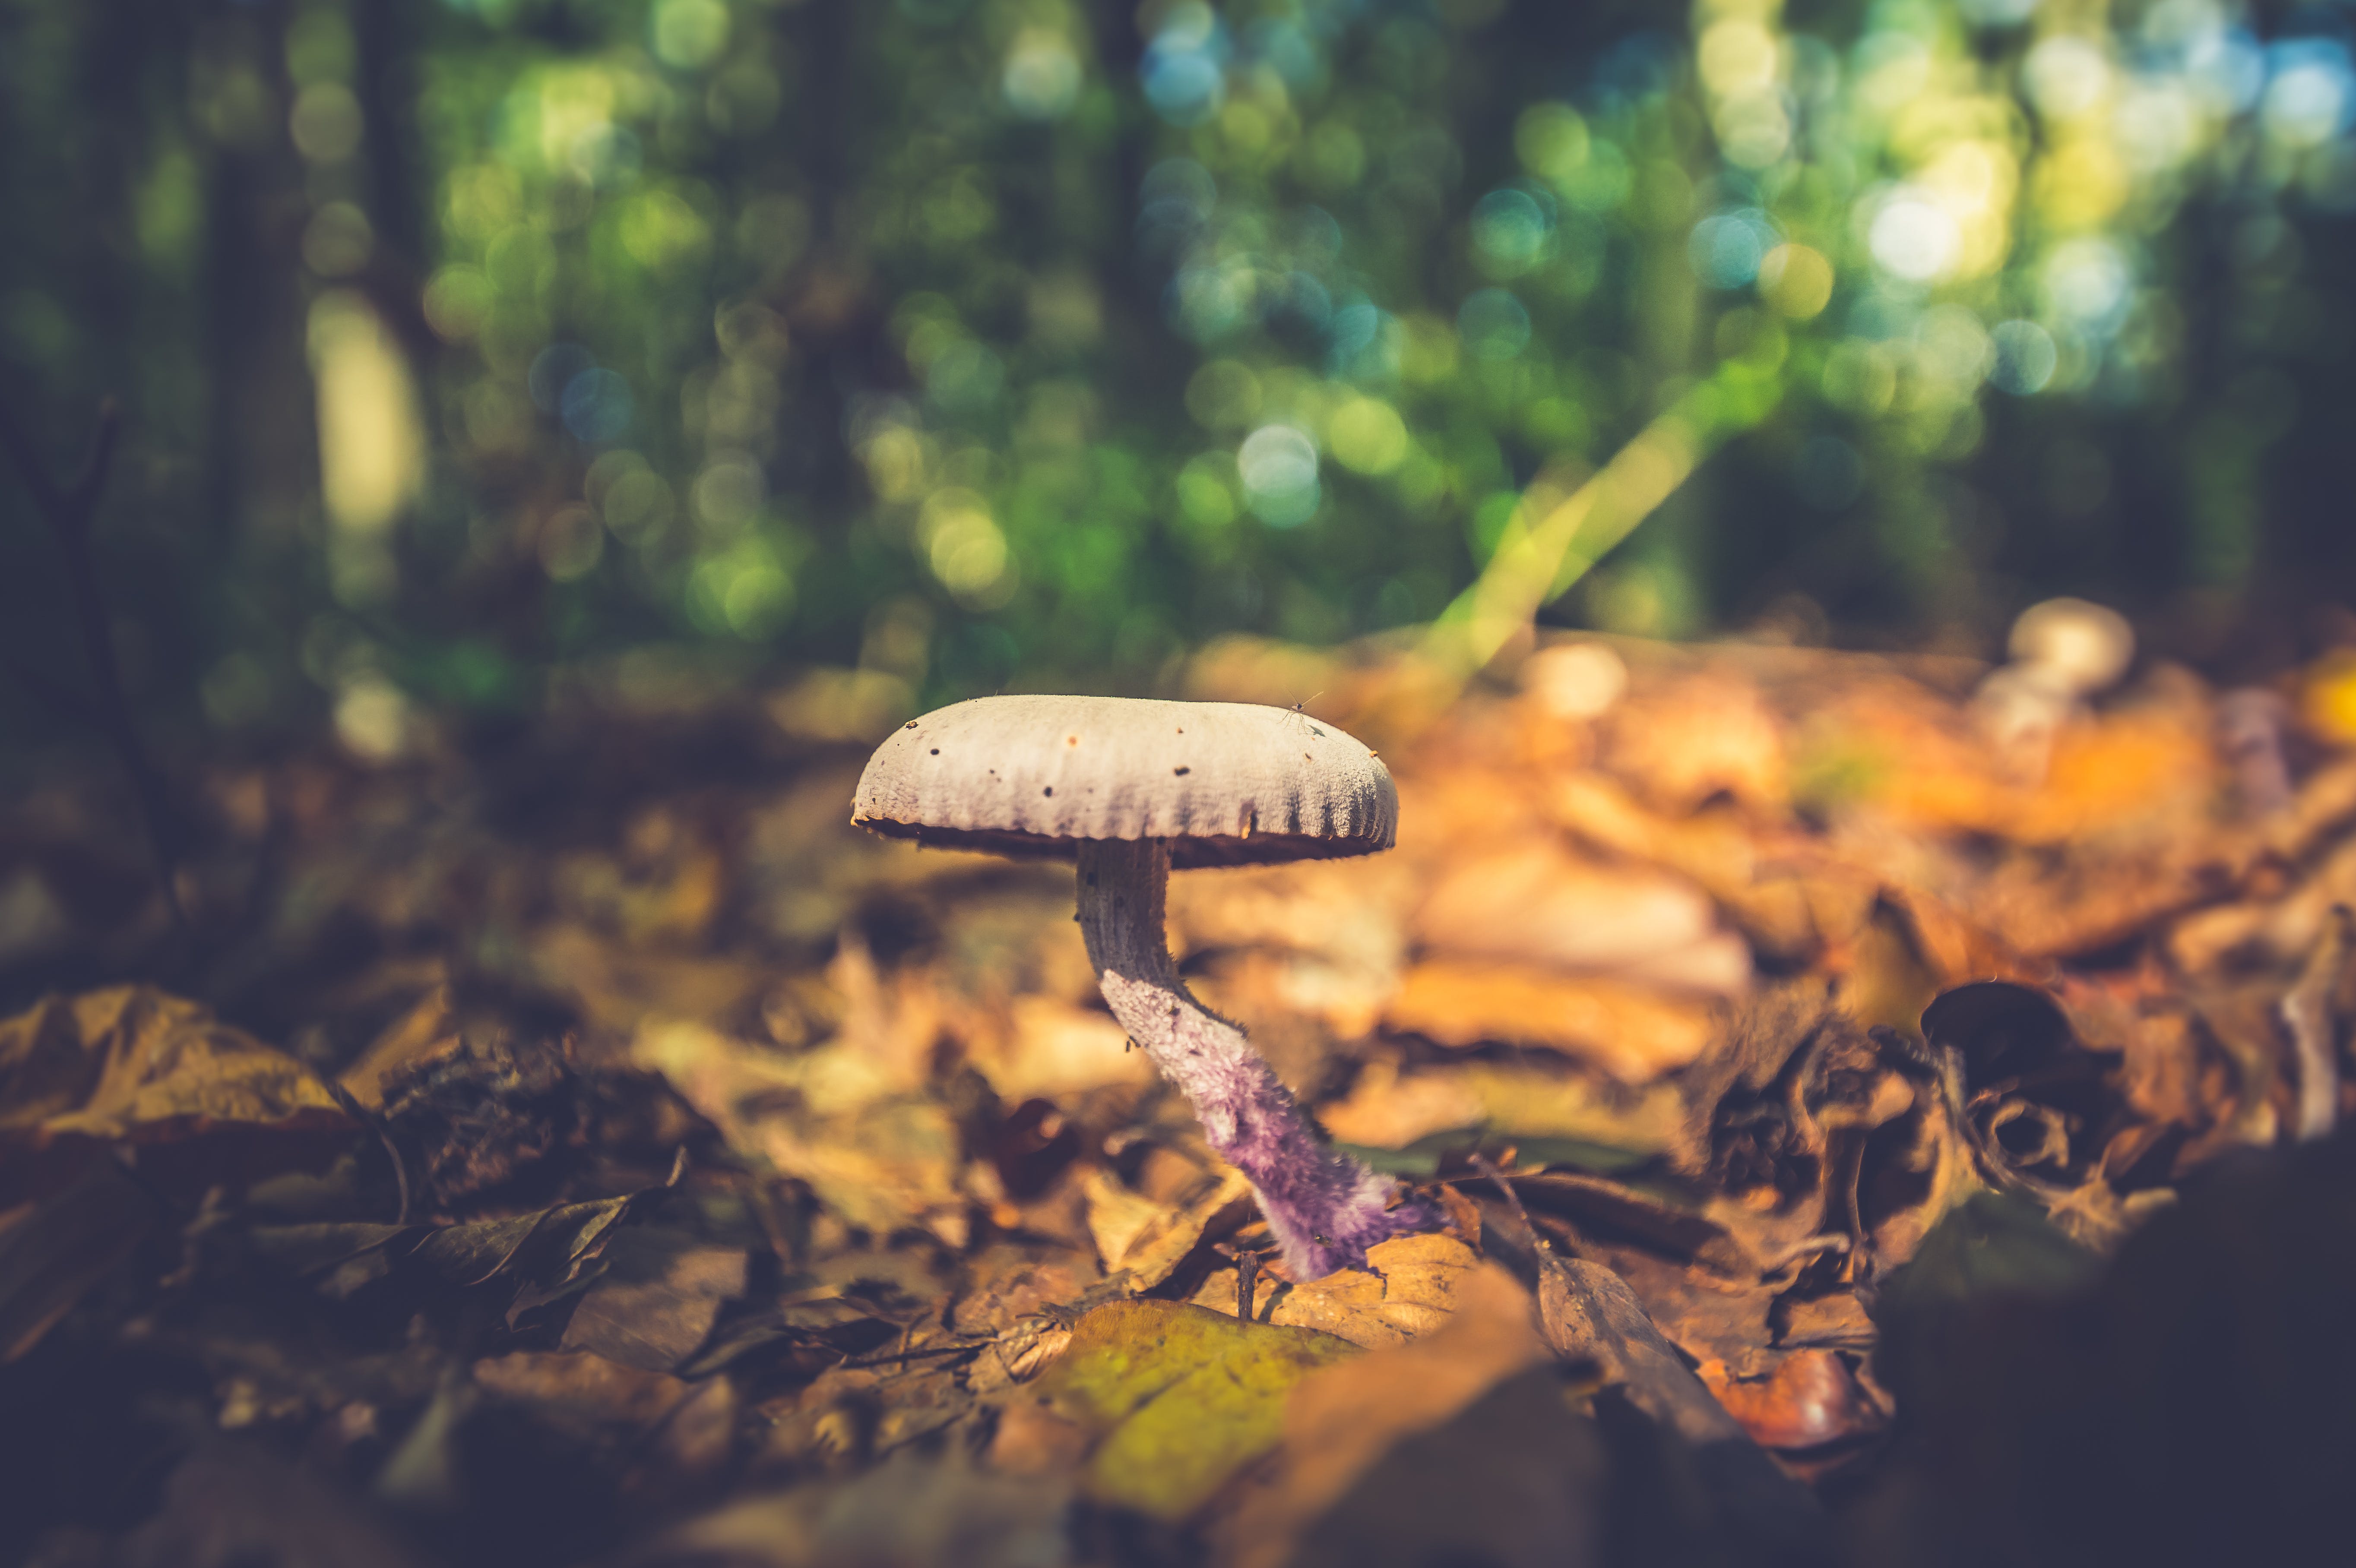 Anti Aging Mushrooms: The Benefits Of Medical Mushrooms For Aging